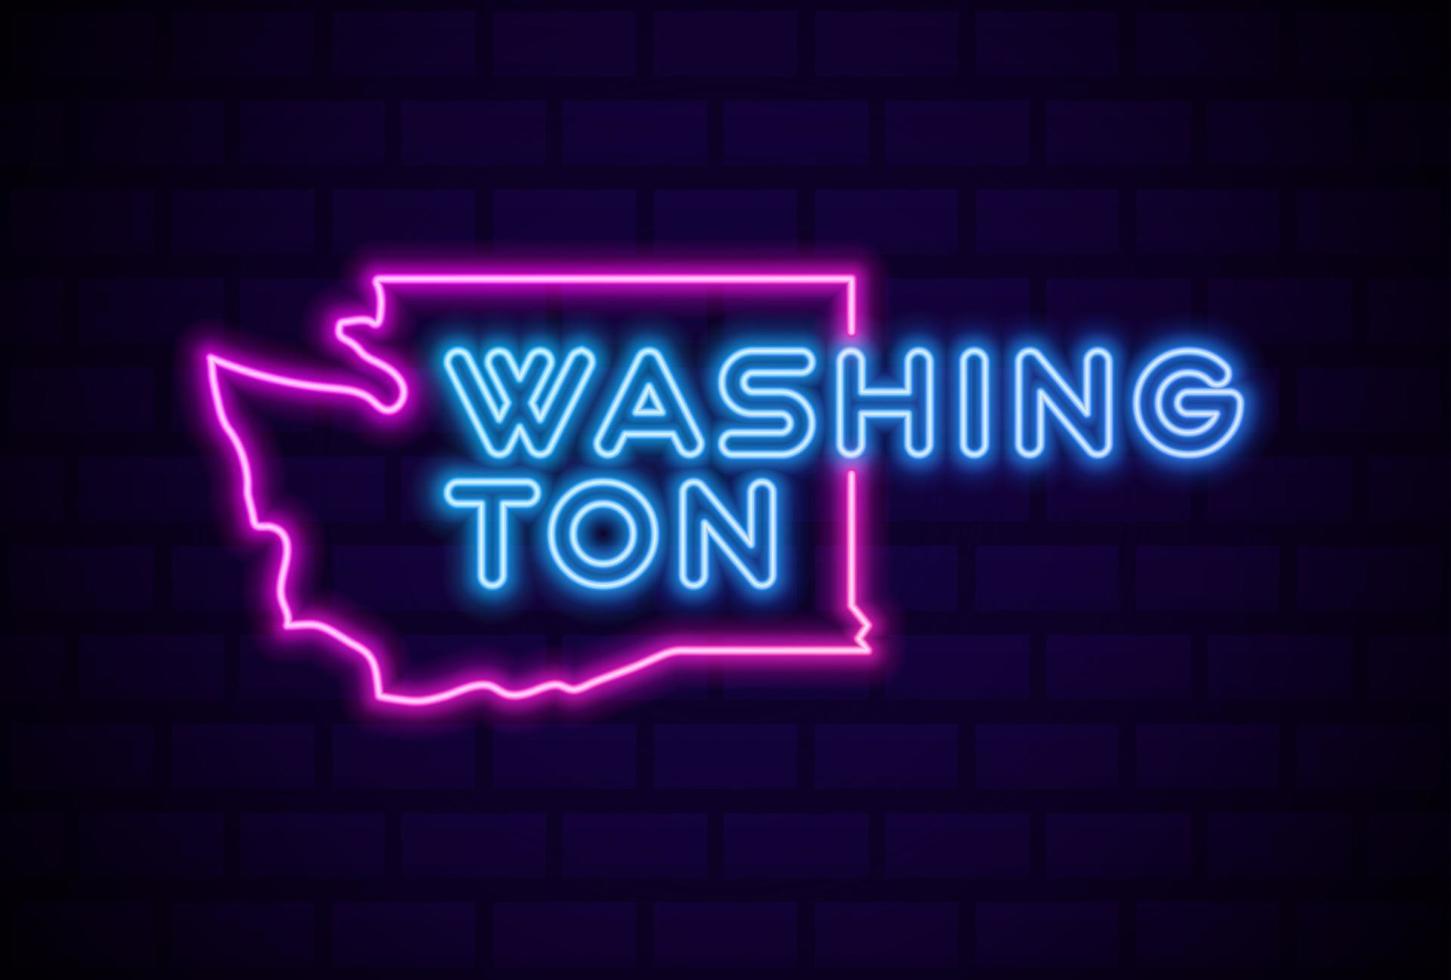 washington US state glowing neon lamp sign Realistic vector illustration Blue brick wall glow